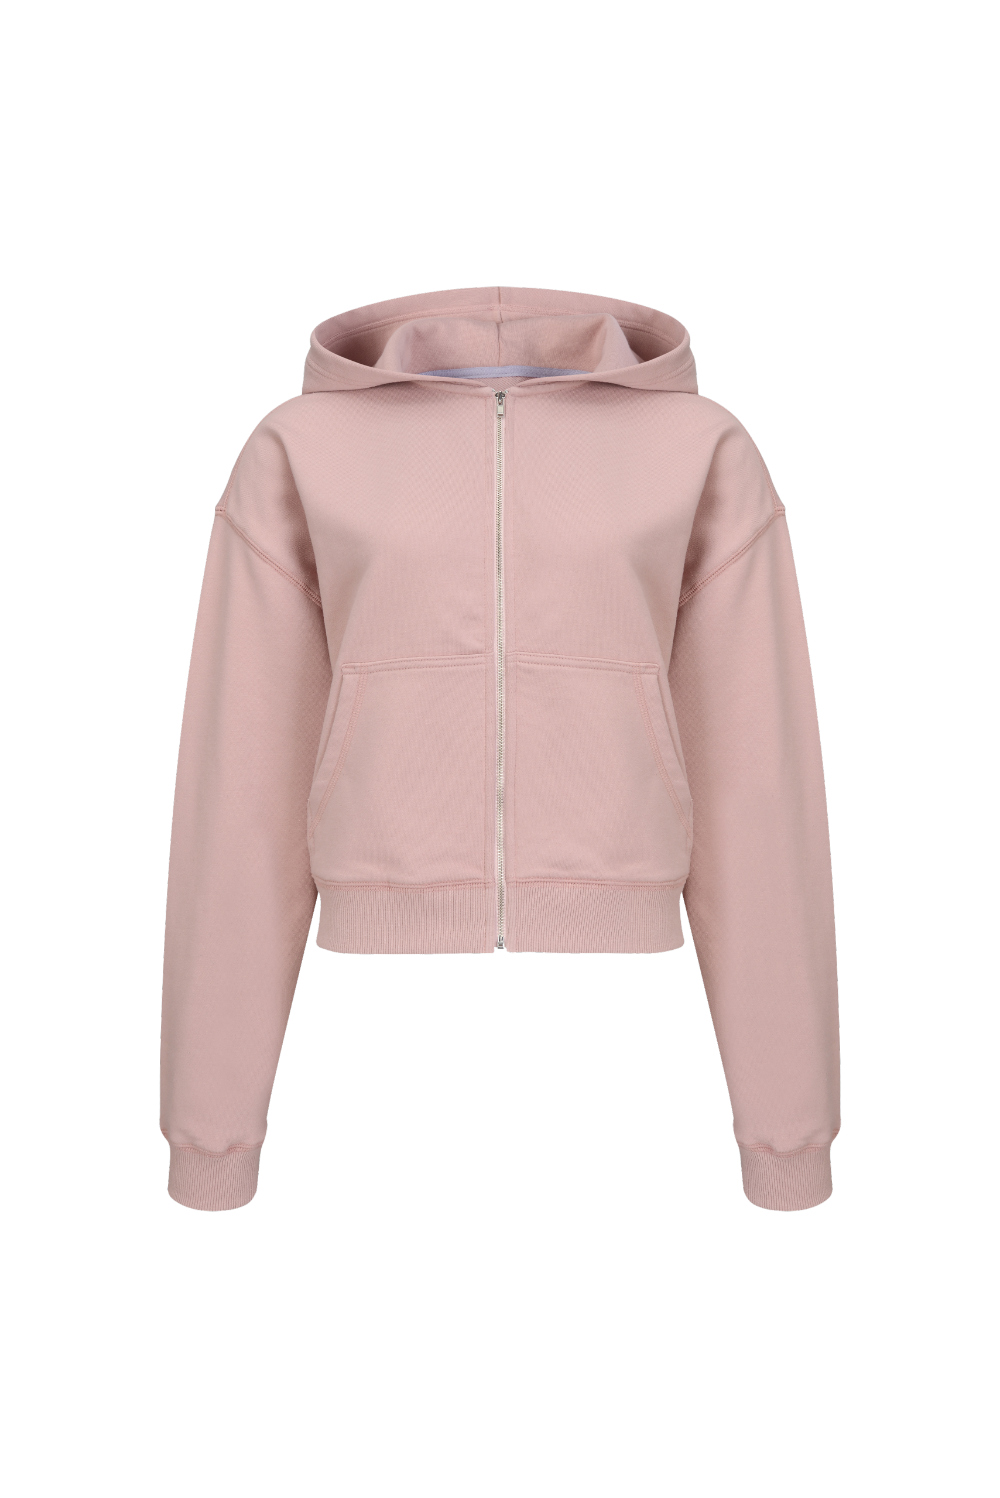 jacket baby pink color image-S1L33